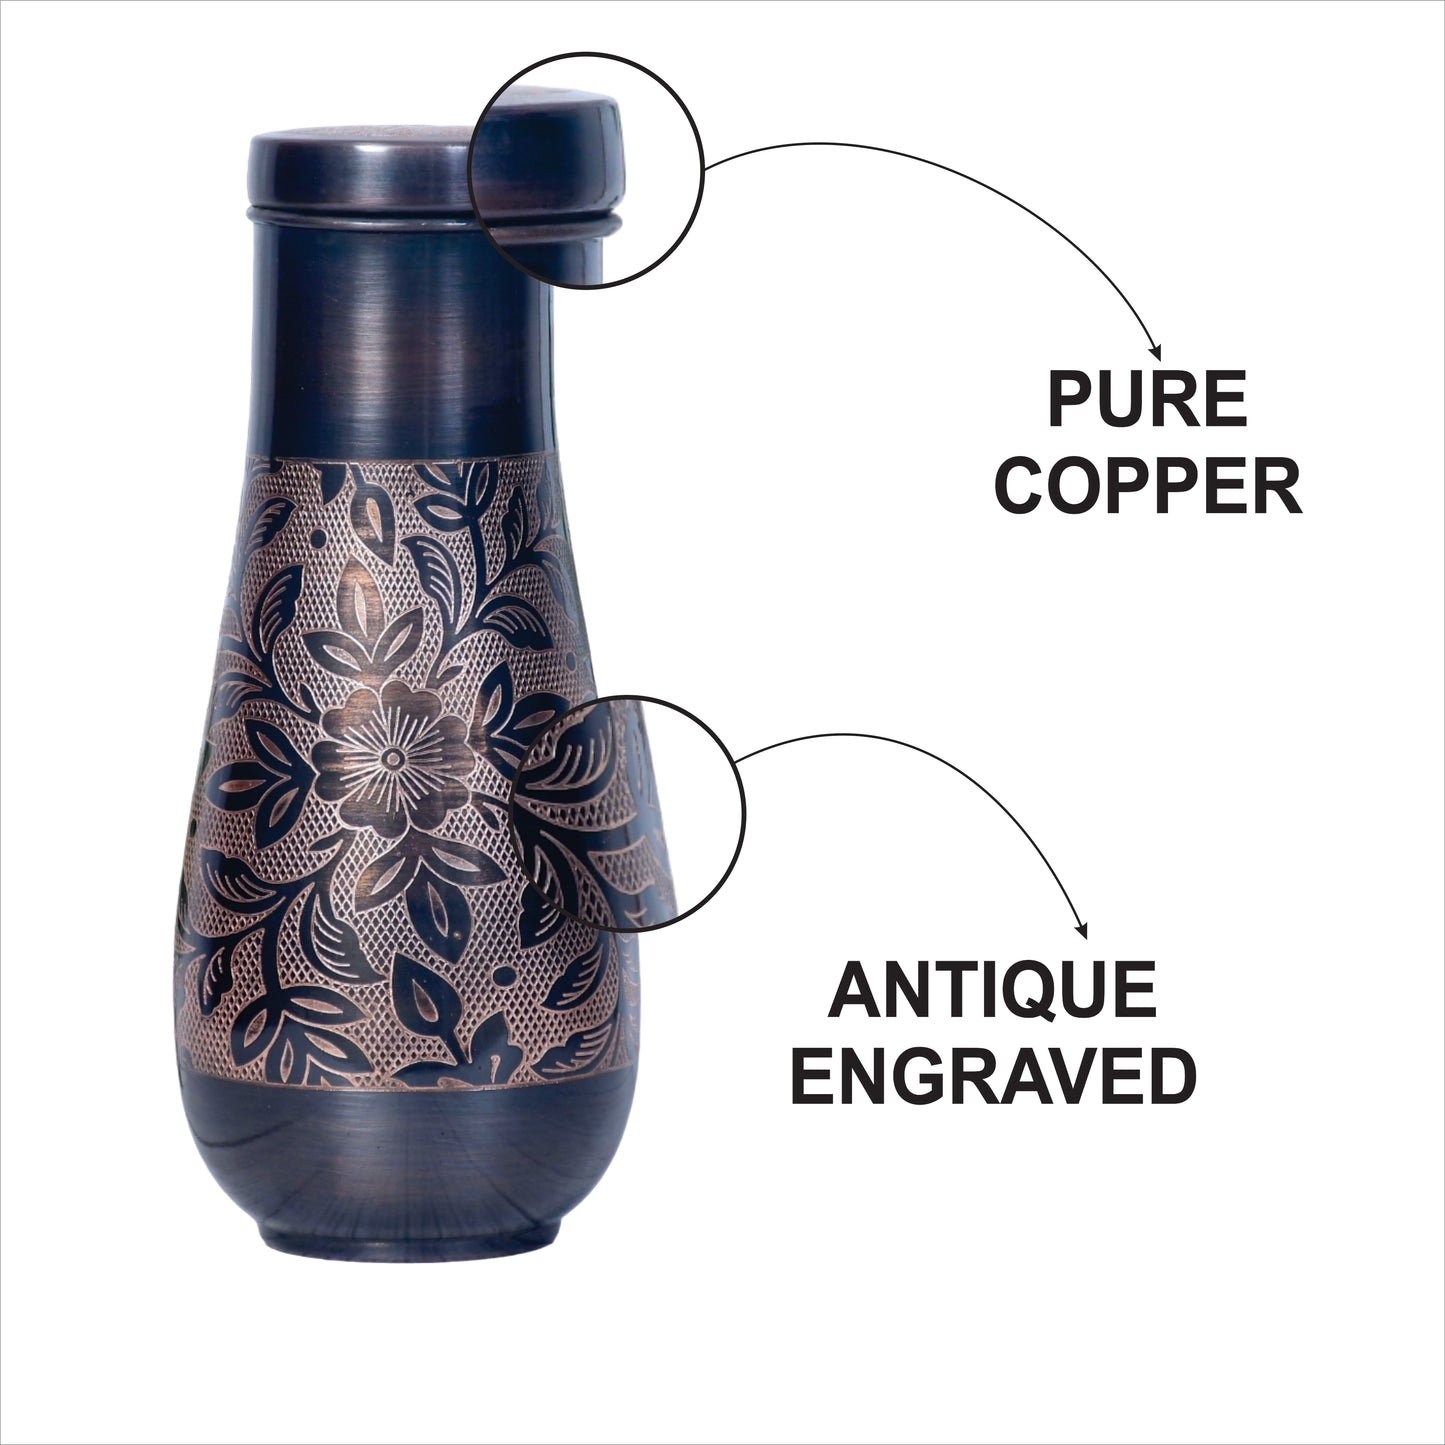 Pure Copper Tulip Jar Antique Engraving Floral Designed with Inbuilt Glass Capacity 1400ML